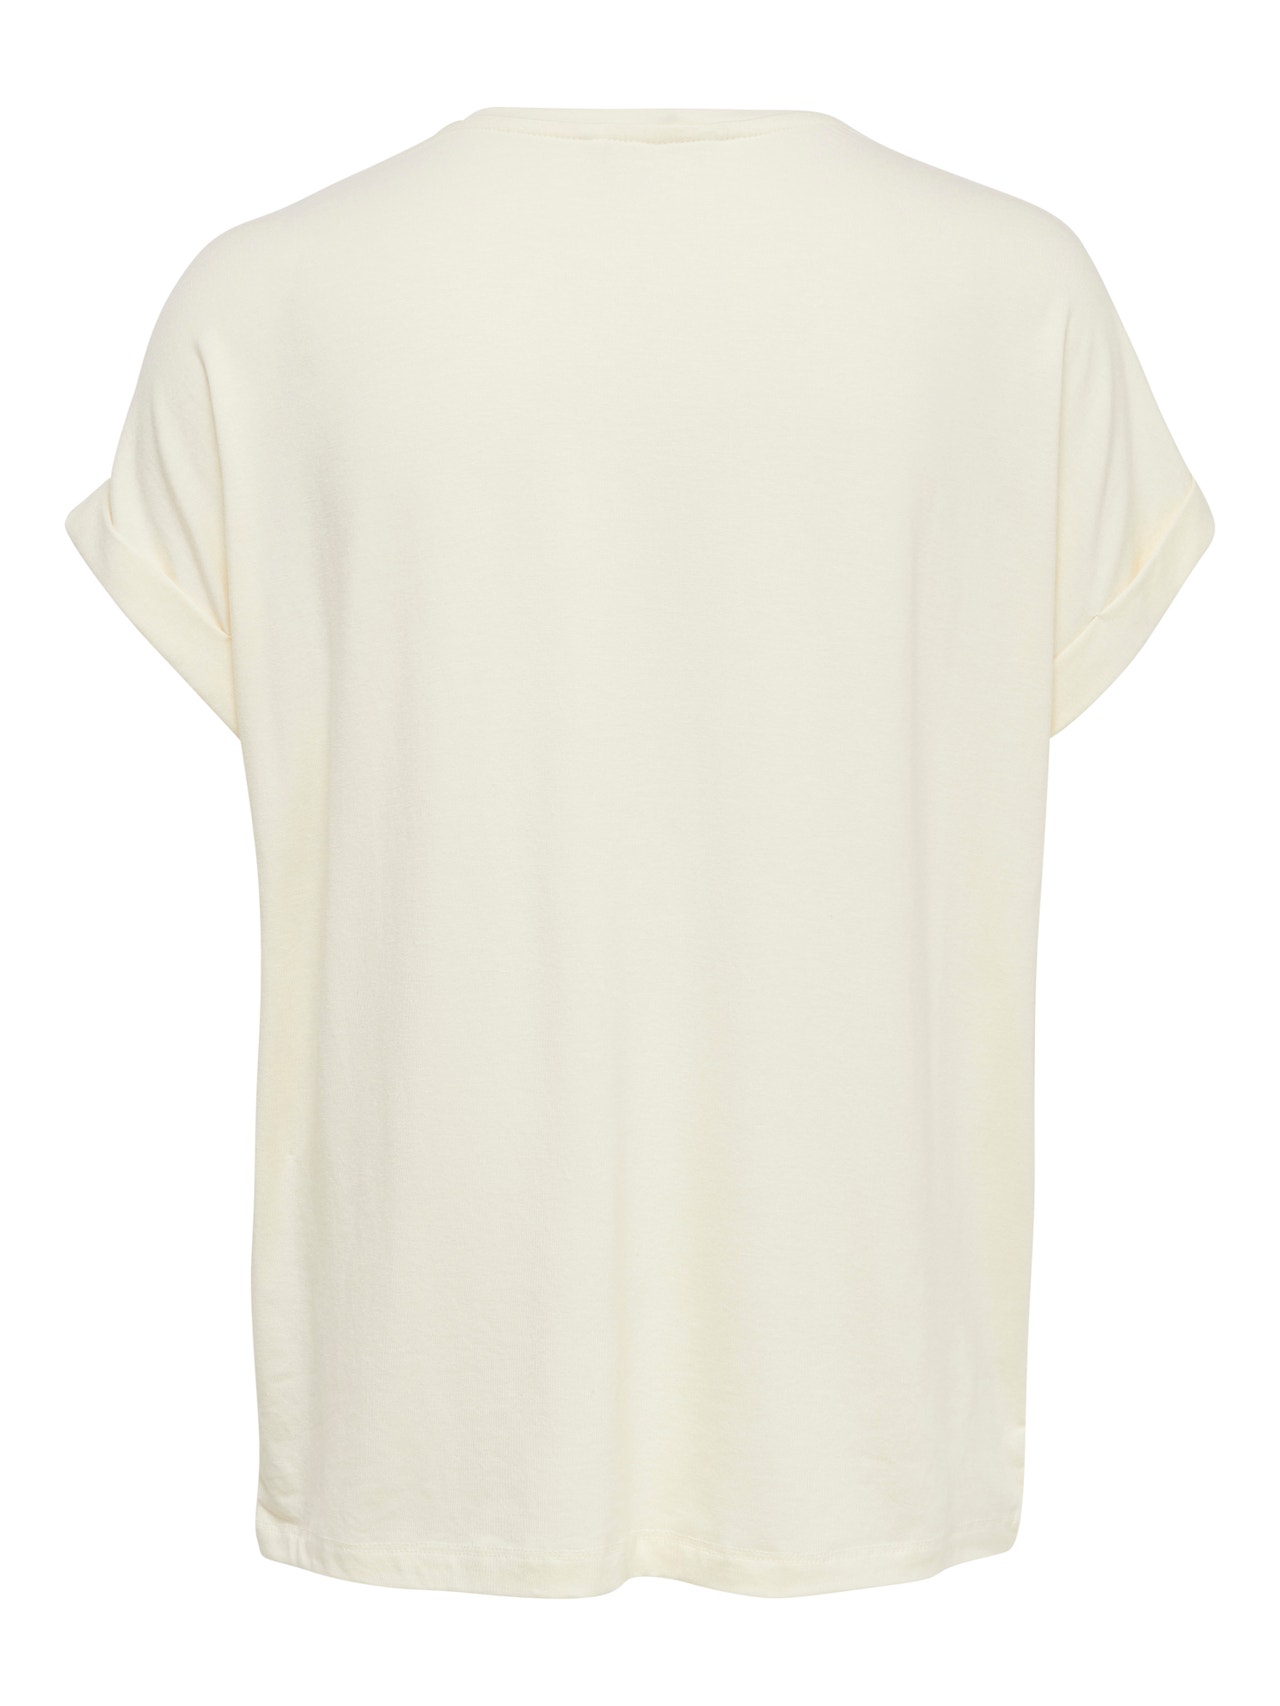 ONLY Regular Fit Round Neck Fold-up cuffs T-Shirt -Antique White - 15106662